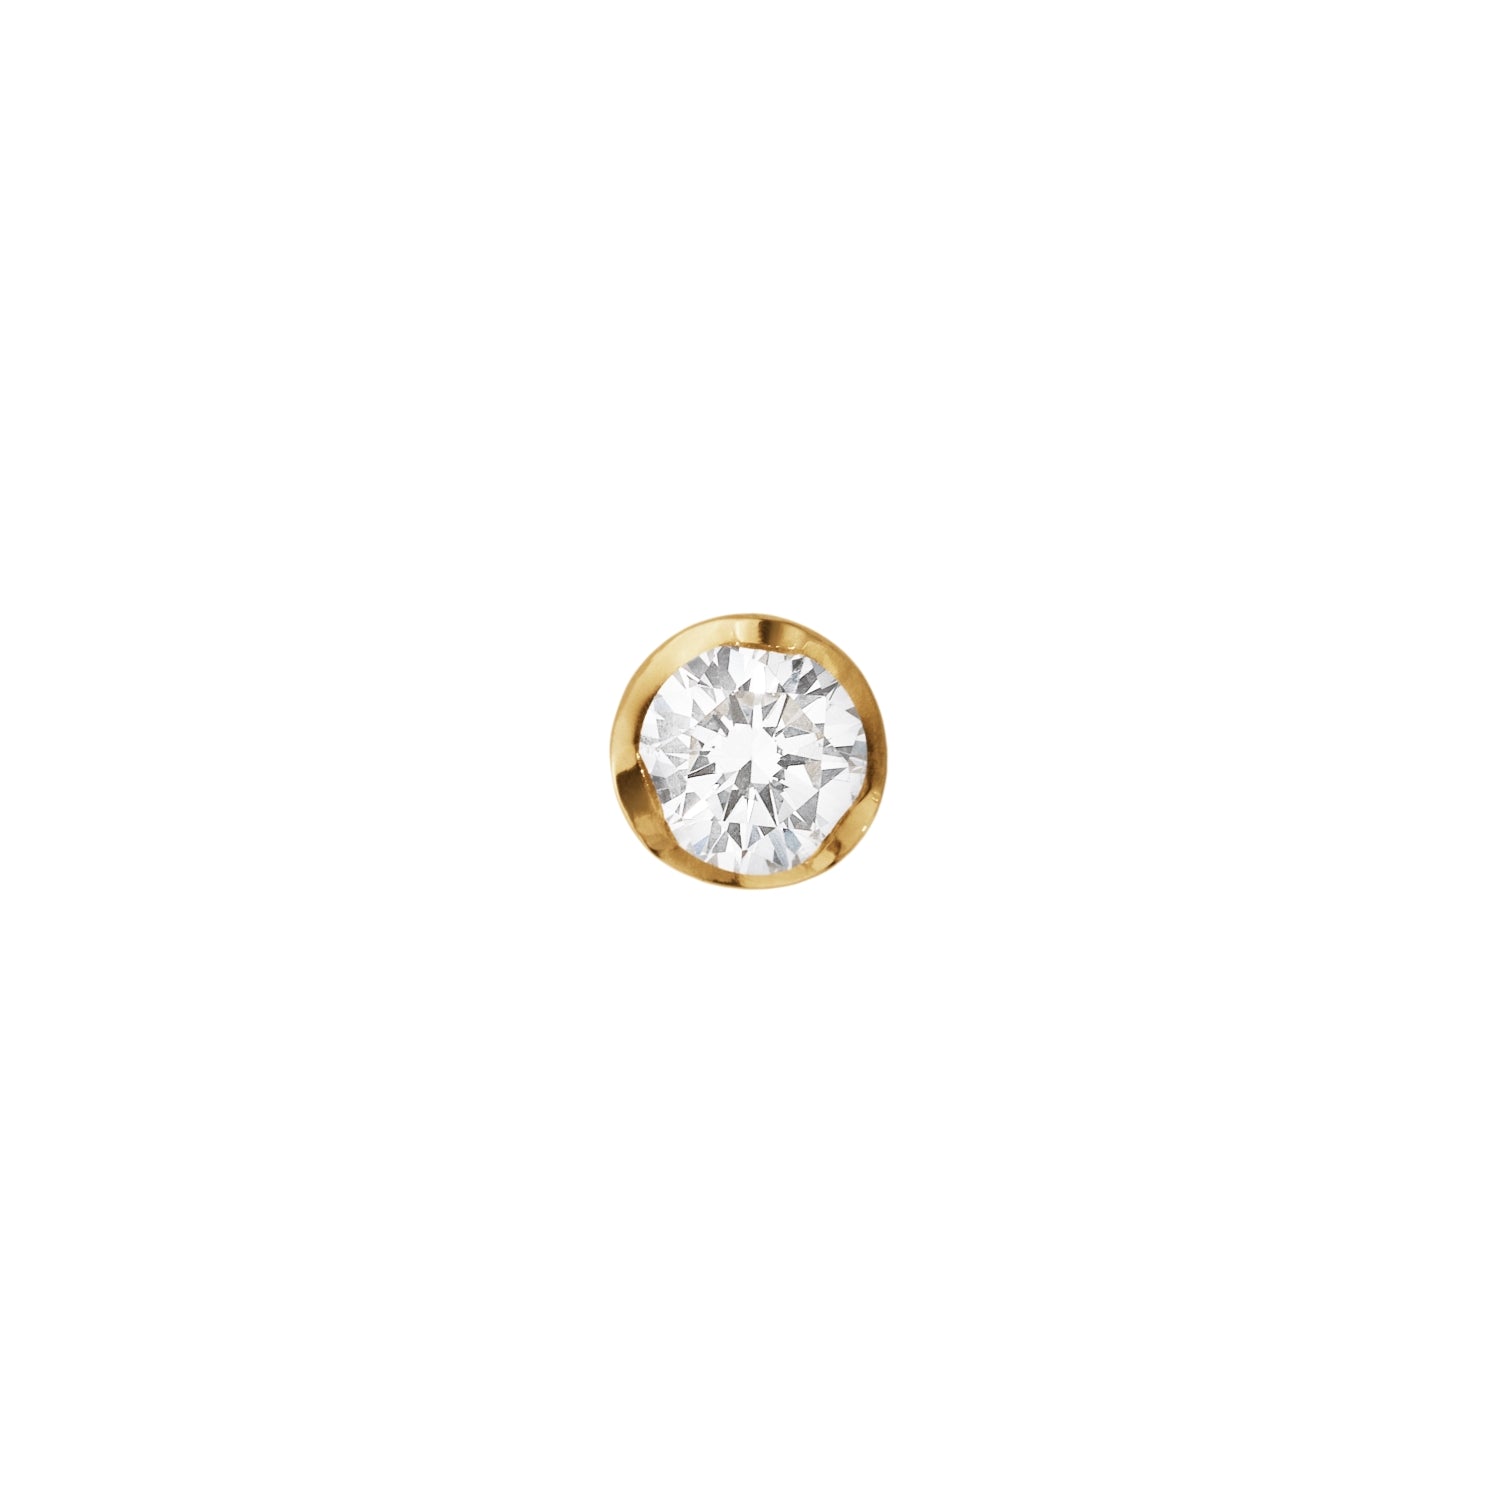 Georg Jensen Signature 18ct Yellow Gold 0.10ct Diamond Stud Earring Single Piece